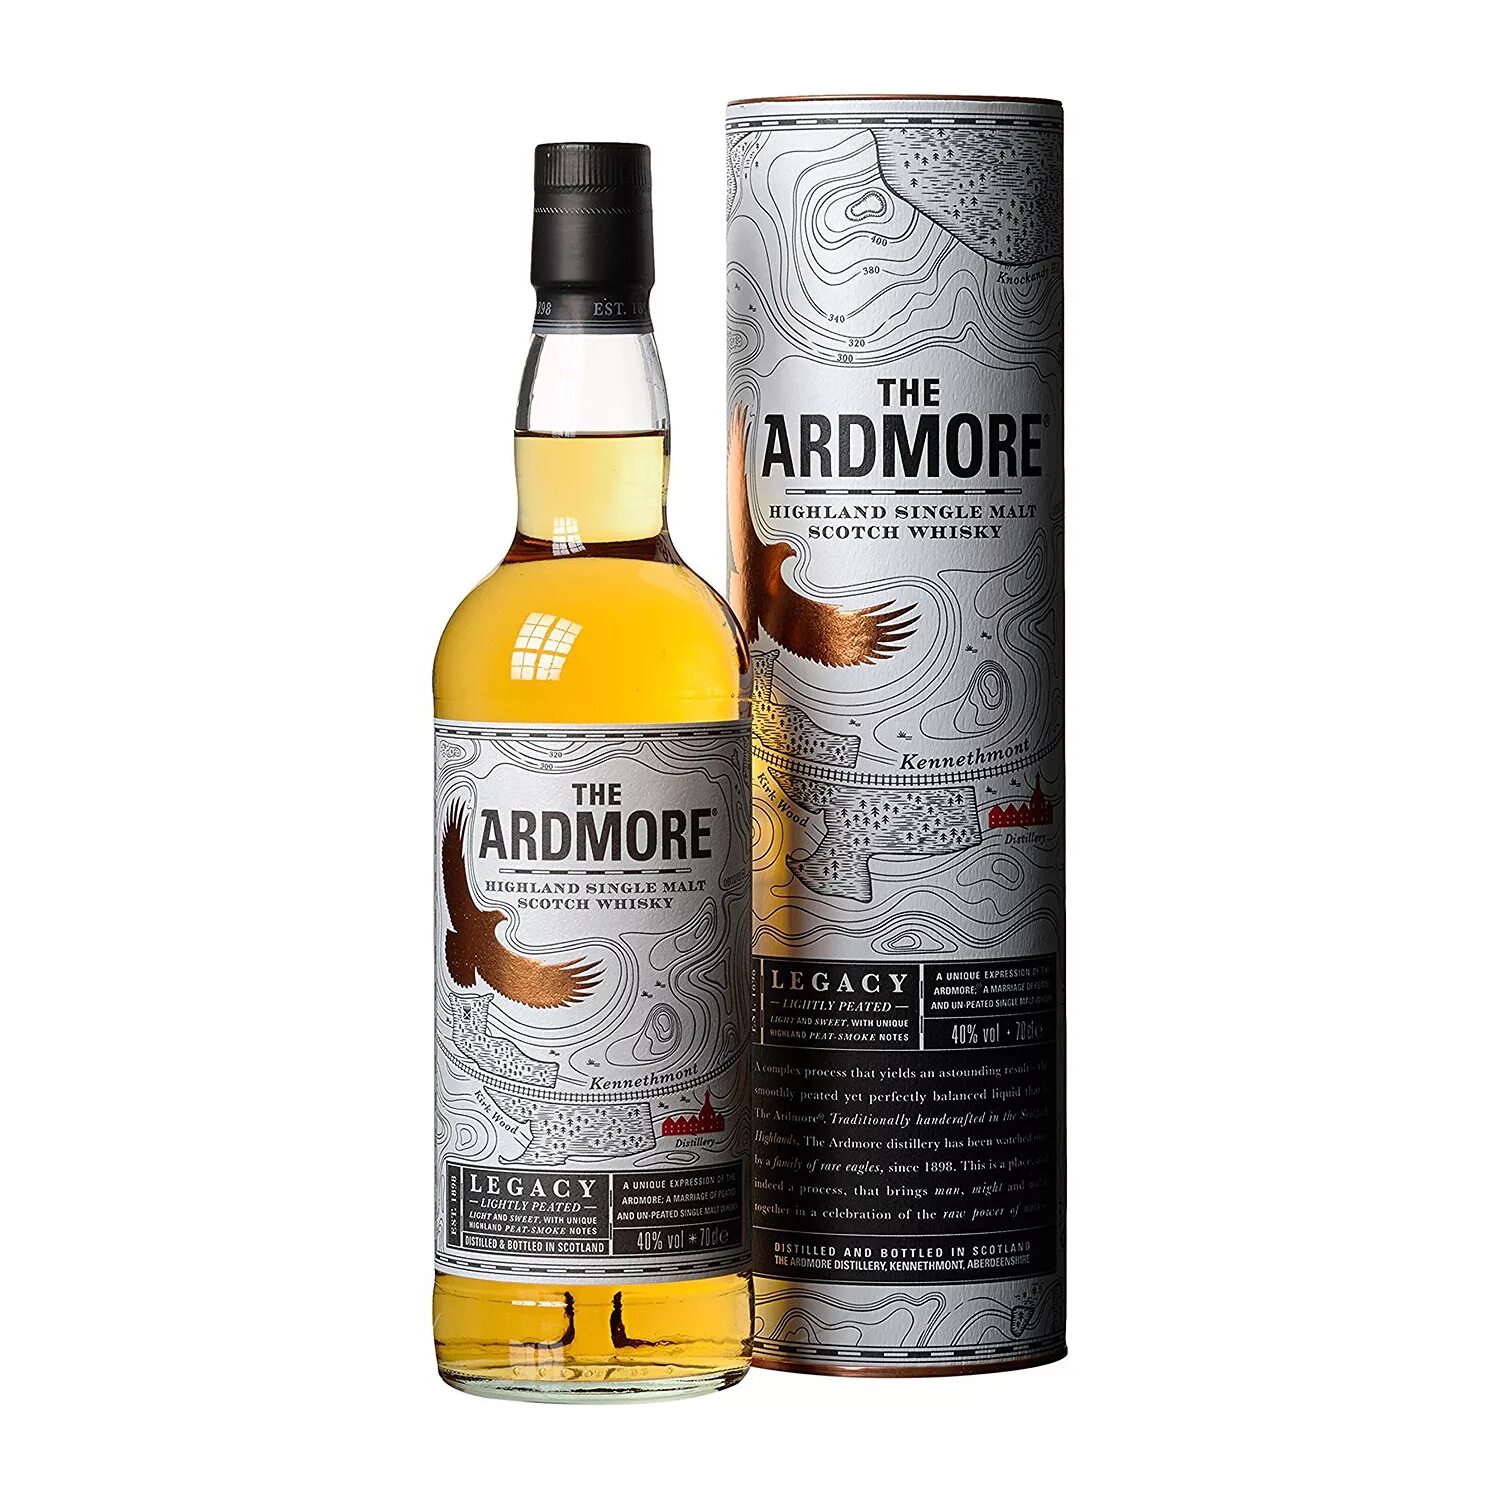 Highland Single Malt Scotch Whisky. Ardmore виски. The Ardmore Highland Single Malt. Русский виски.